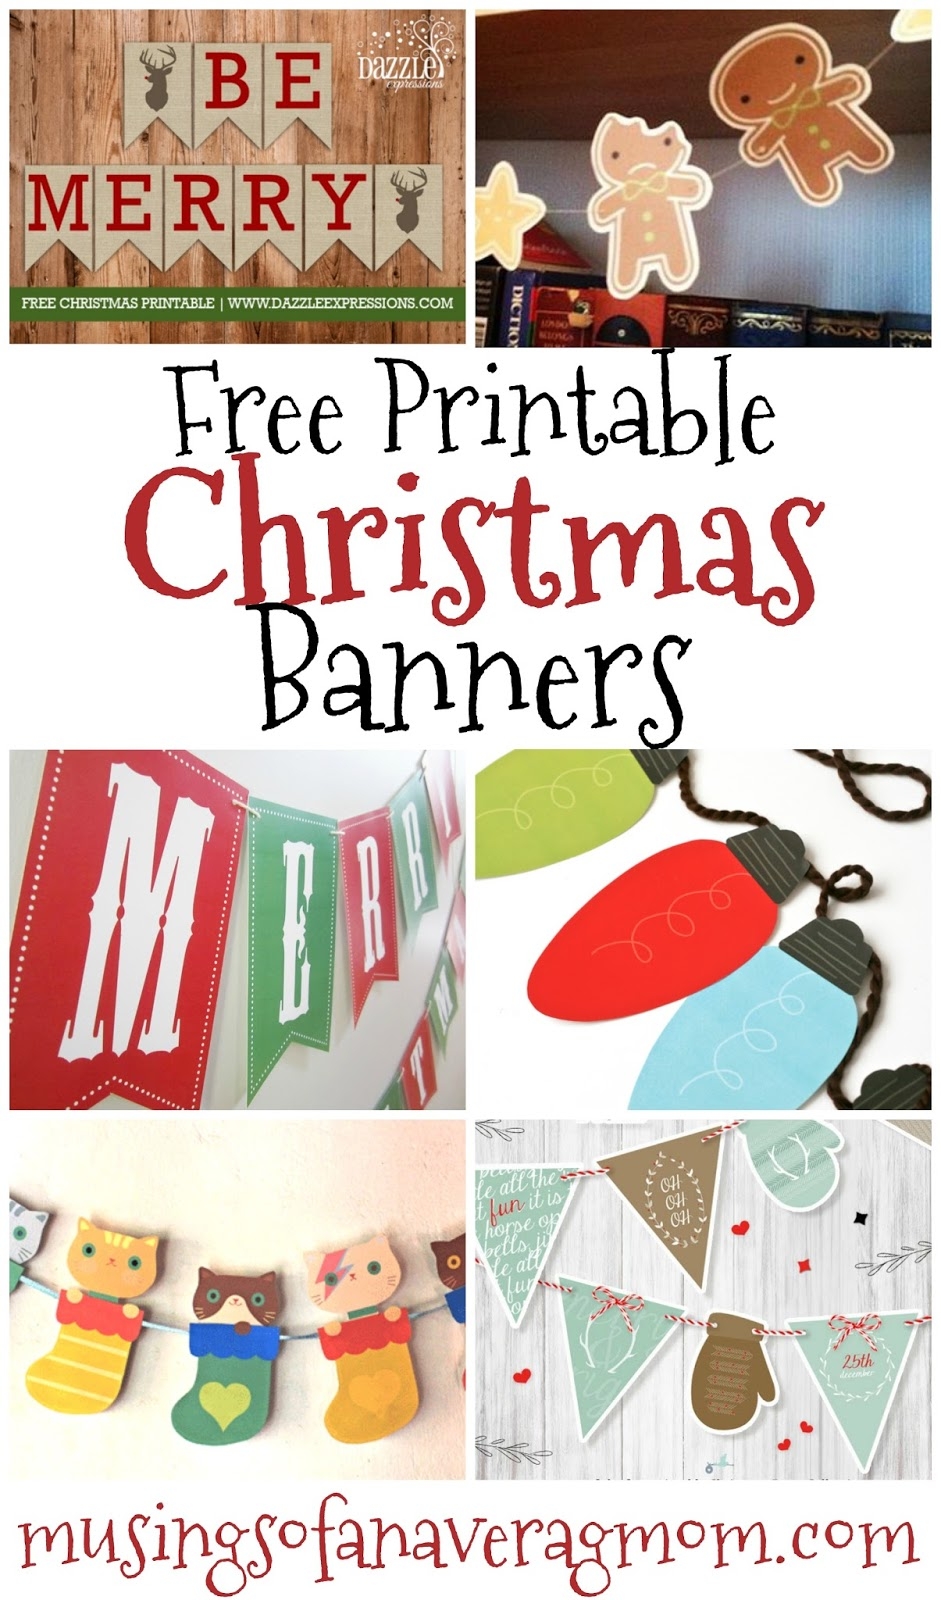 Musings Of An Average Mom Free Printable Christmas Banners - Free Printable Christmas Banner